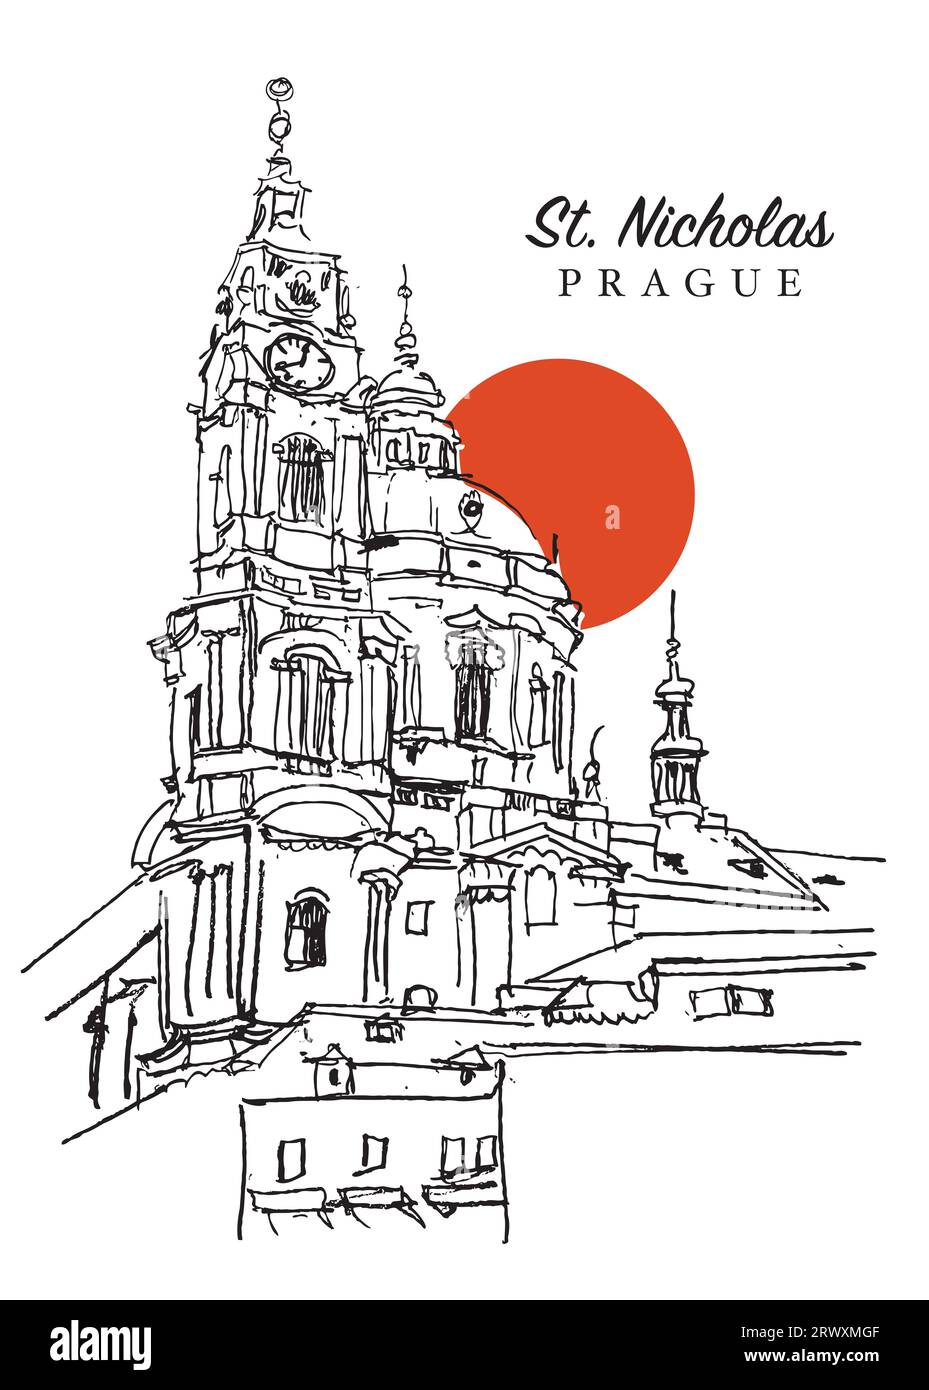 Vector hand drawn sketch illustration of St. Nicholas Church in Prague, Czechia. Stock Photo